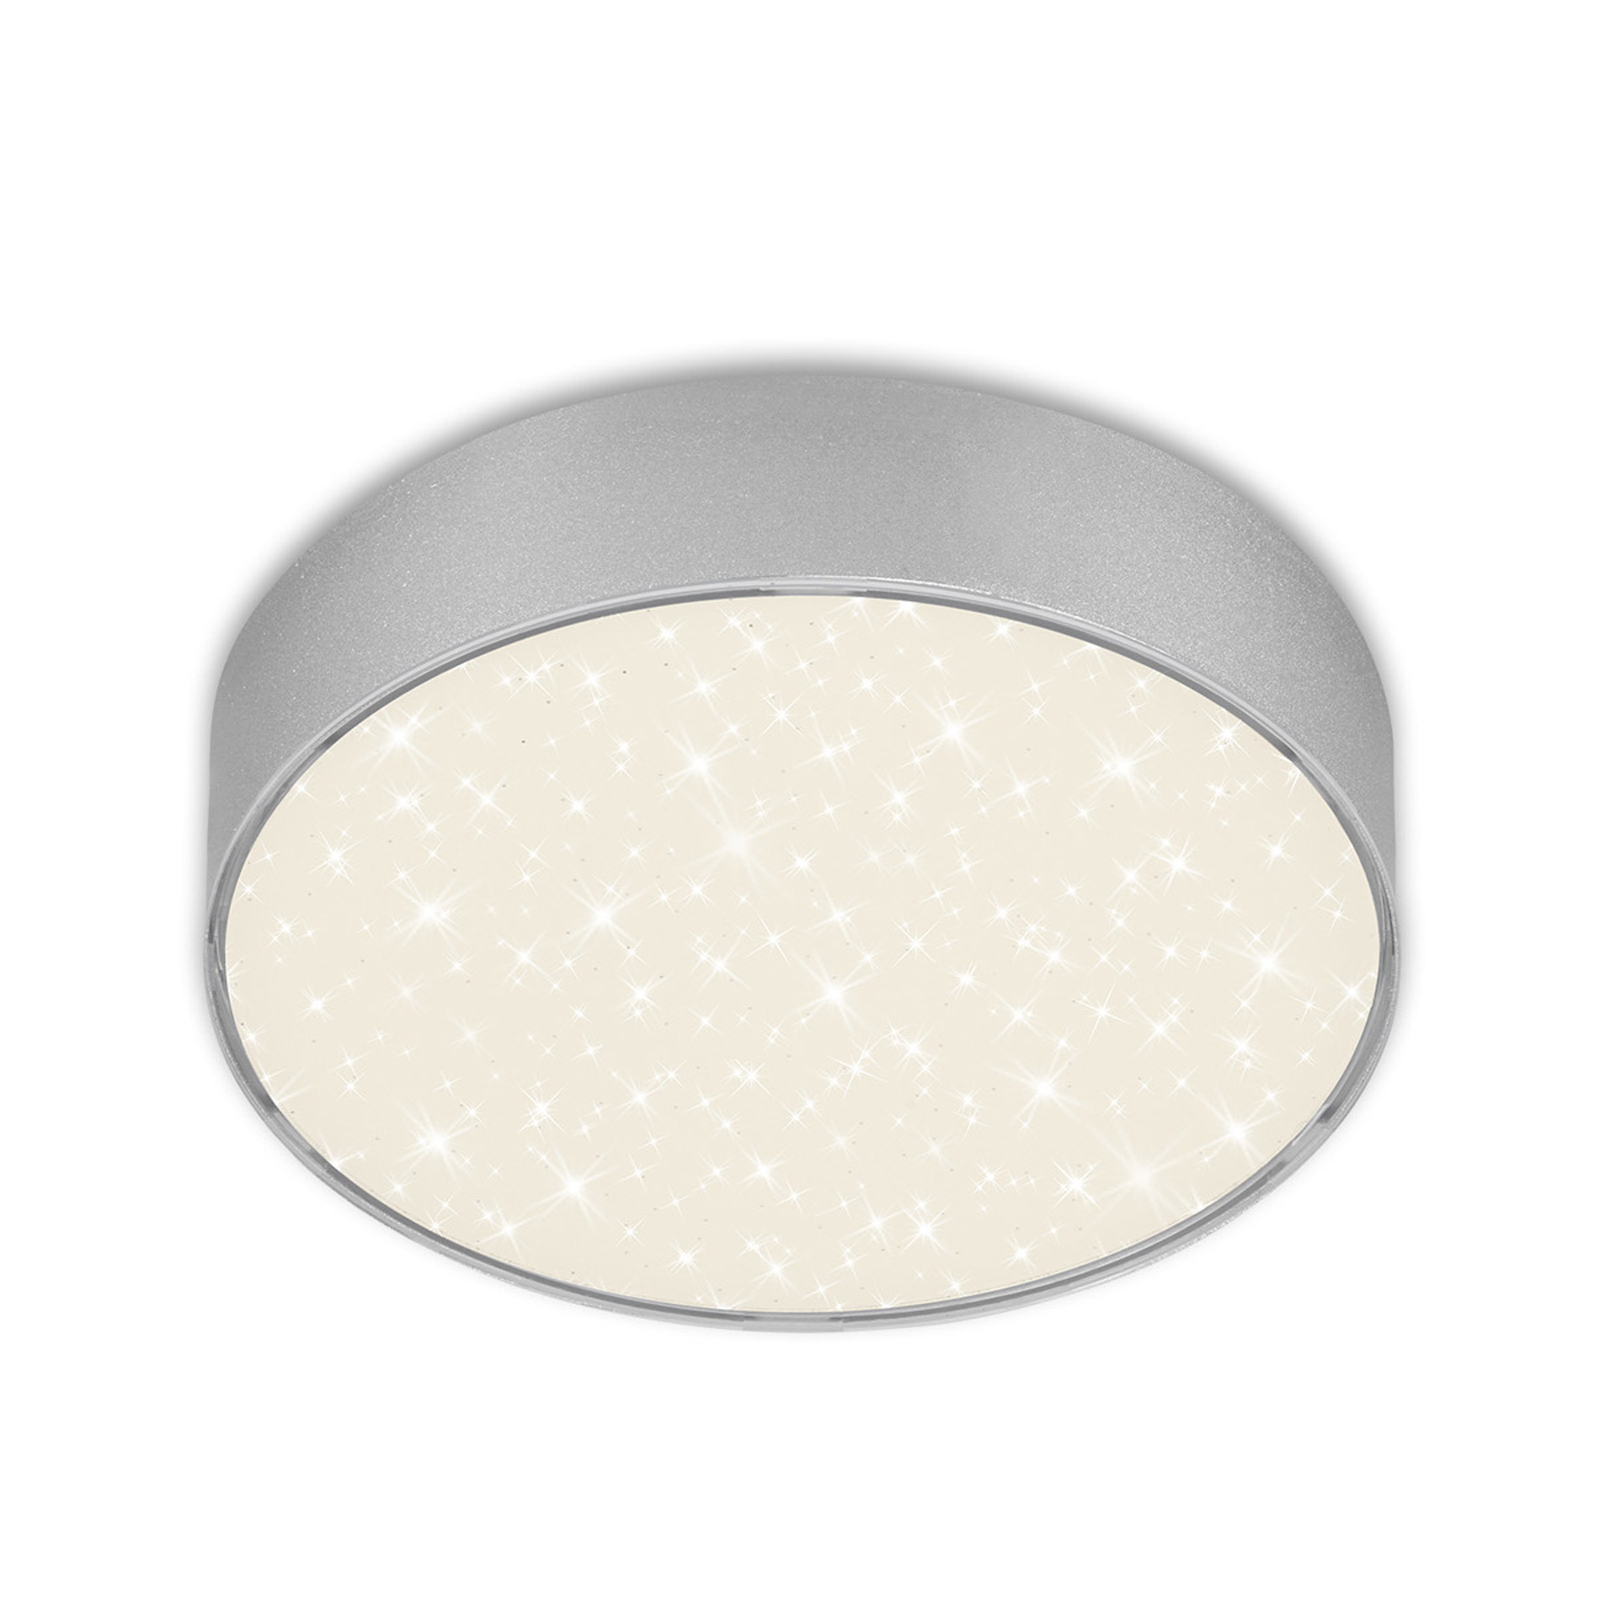 Flame Star LED ceiling light, Ø 15.7 cm, silver